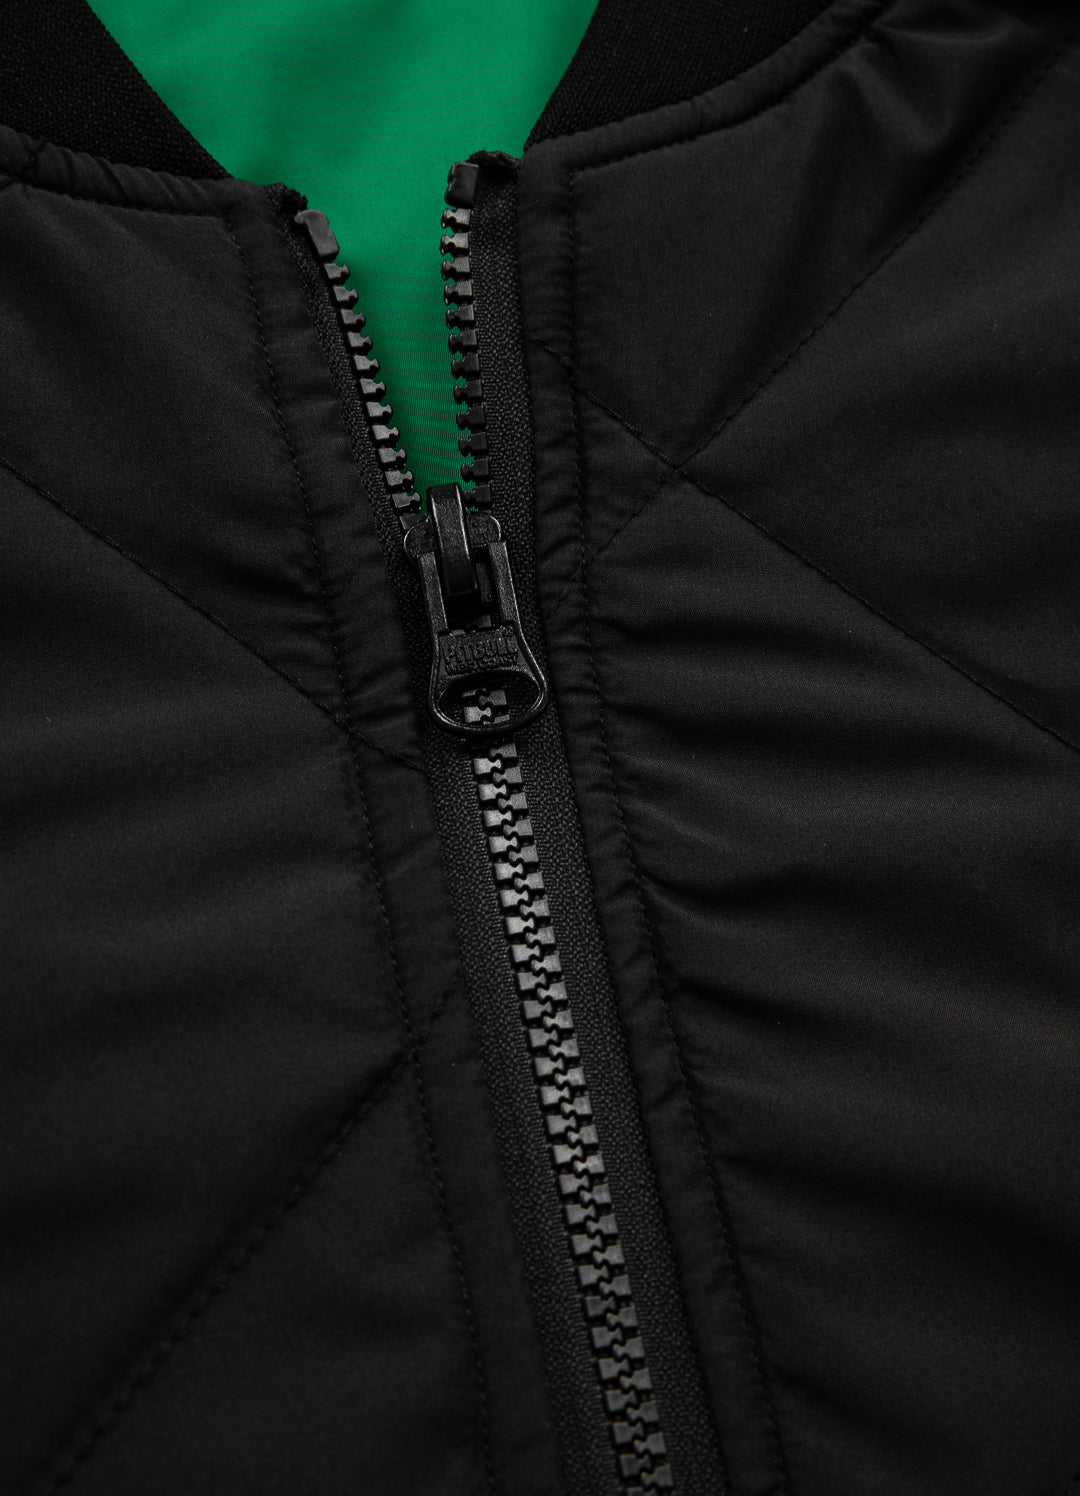 BROADWAY Green Reversible Jacket.